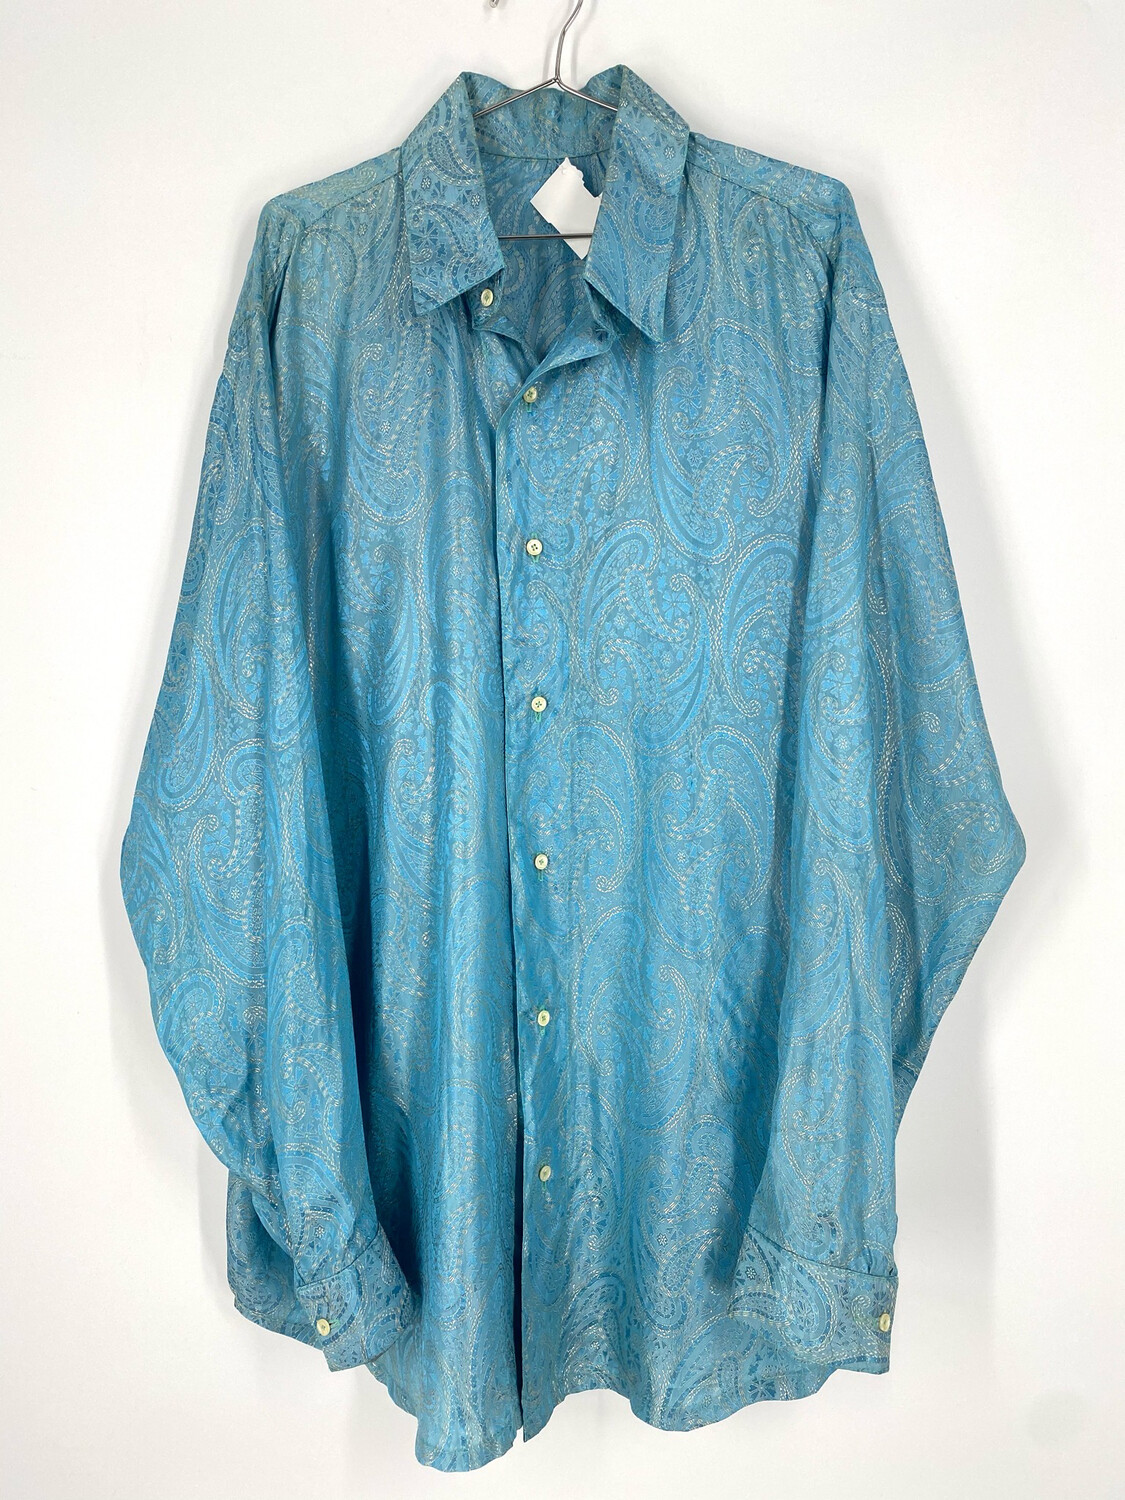 Vintage 70’s Style Button Up Shirt Size L